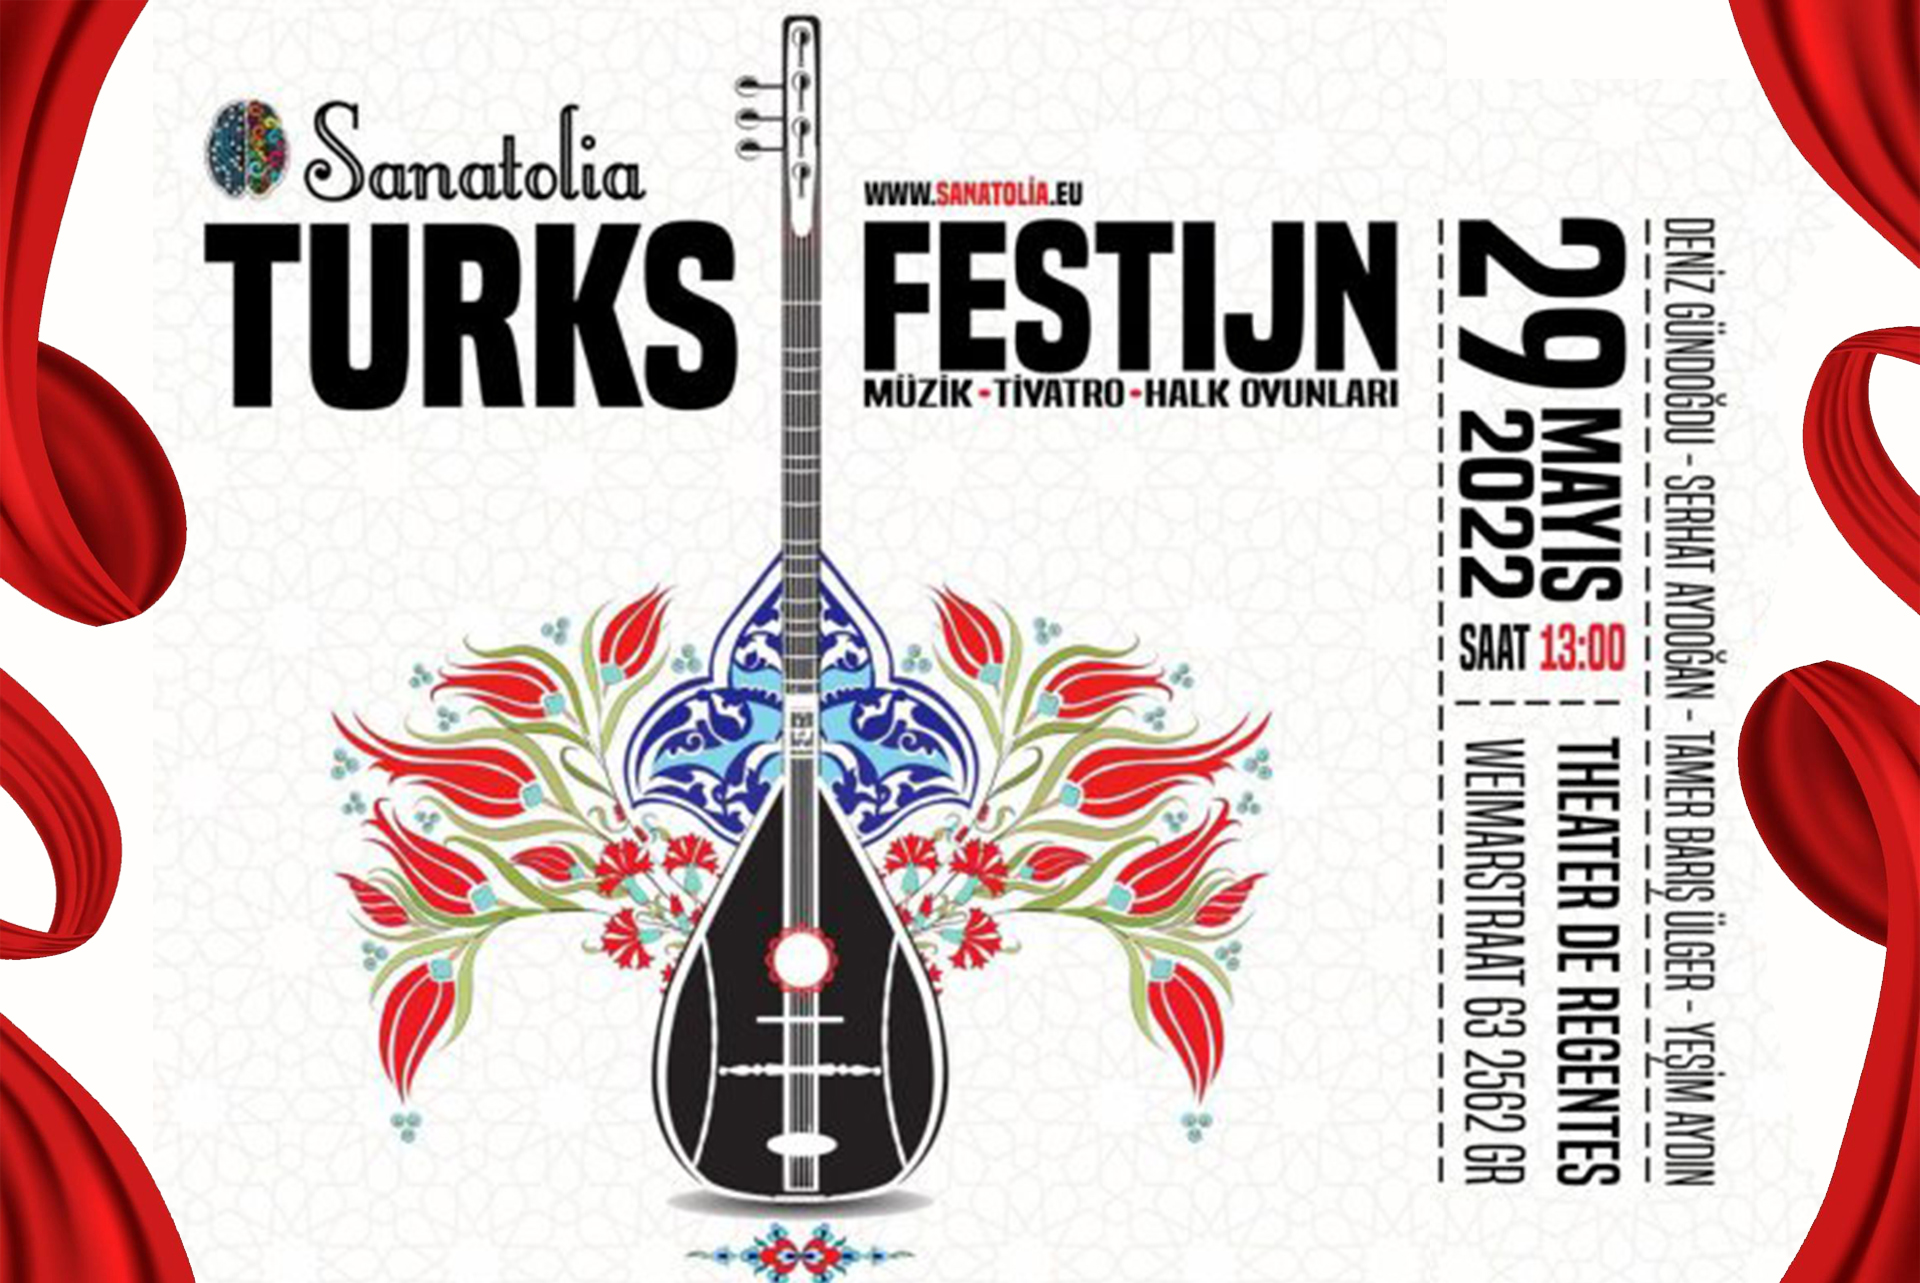 turks festijn media site